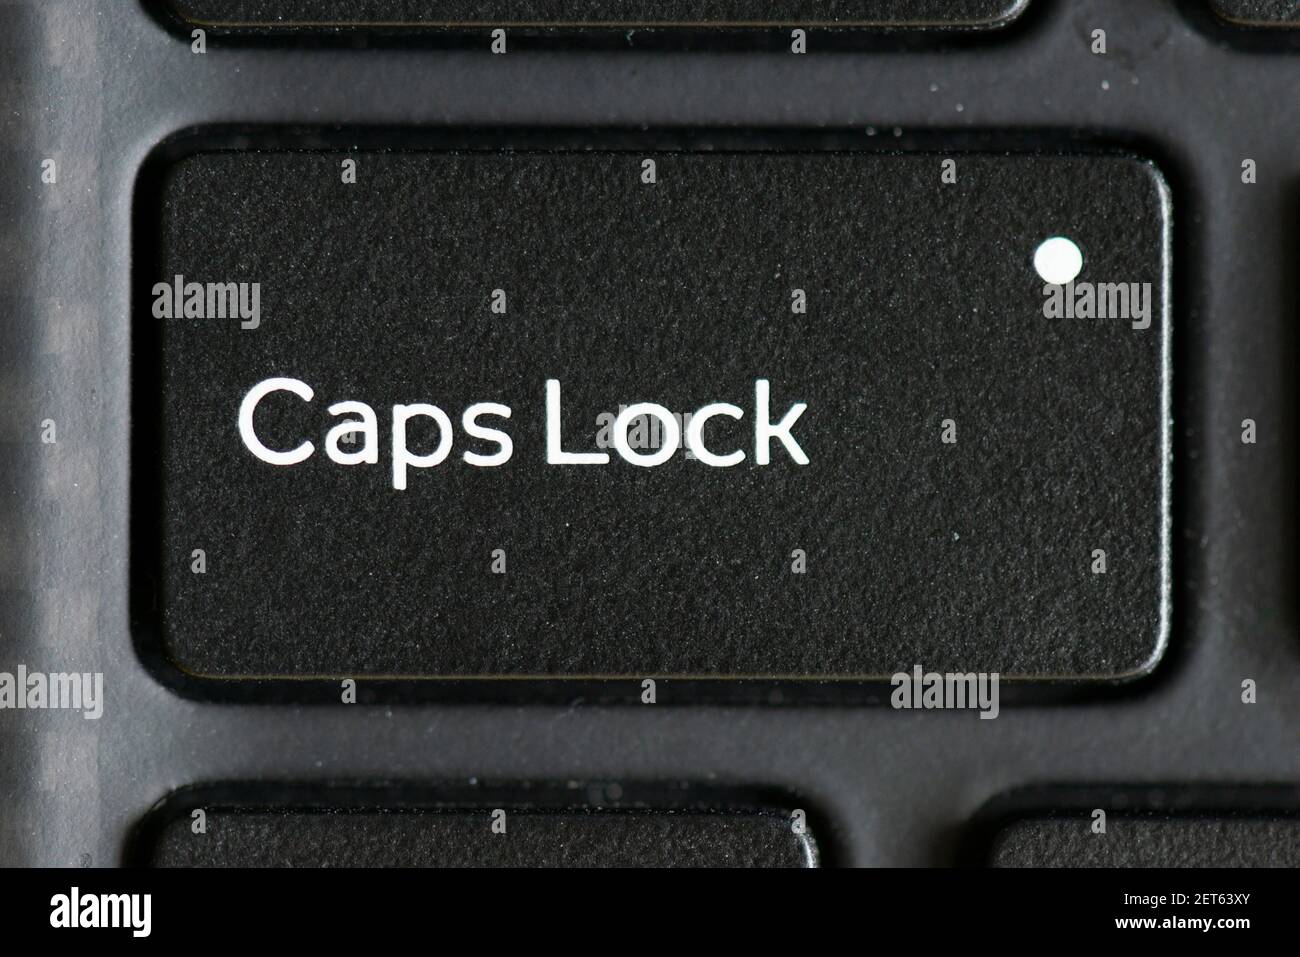 Caps Lock key on a laptop keyboard Stock Photo - Alamy